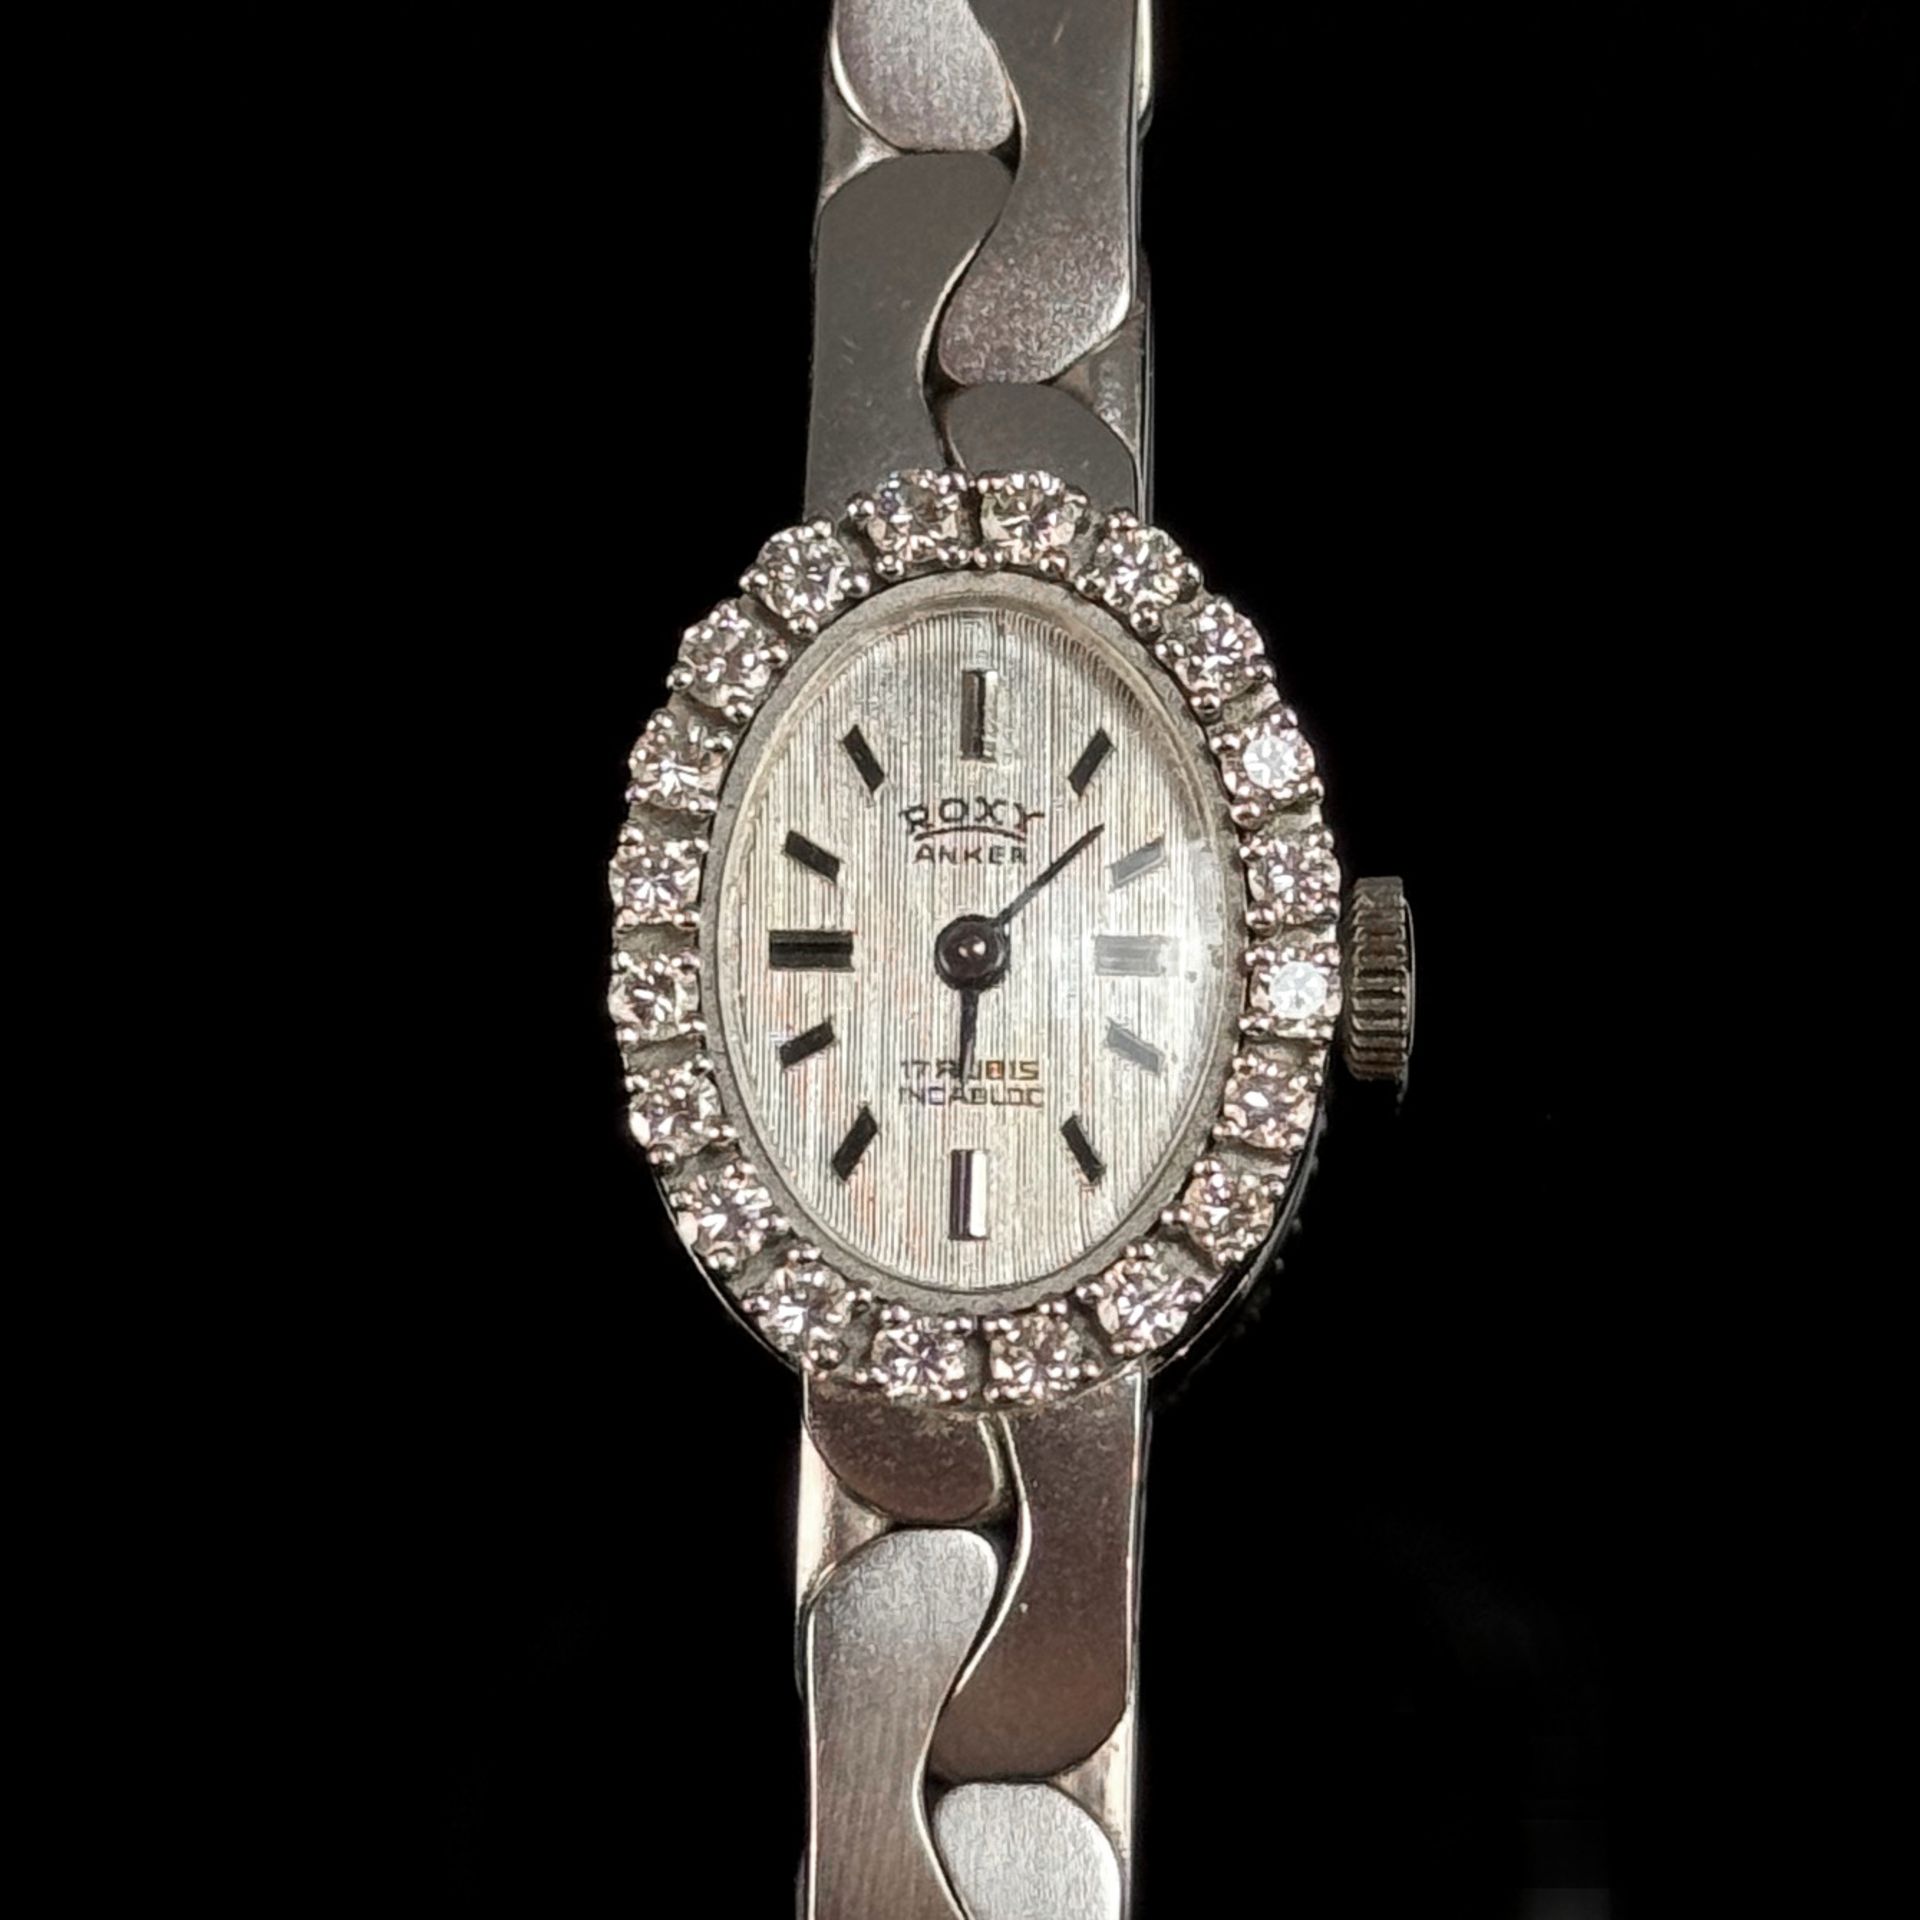 Wristwatch, Roxy, 750/18K white gold (hallmarked), 34.5g, manual winding, starts, oval case, bezel - Image 2 of 3